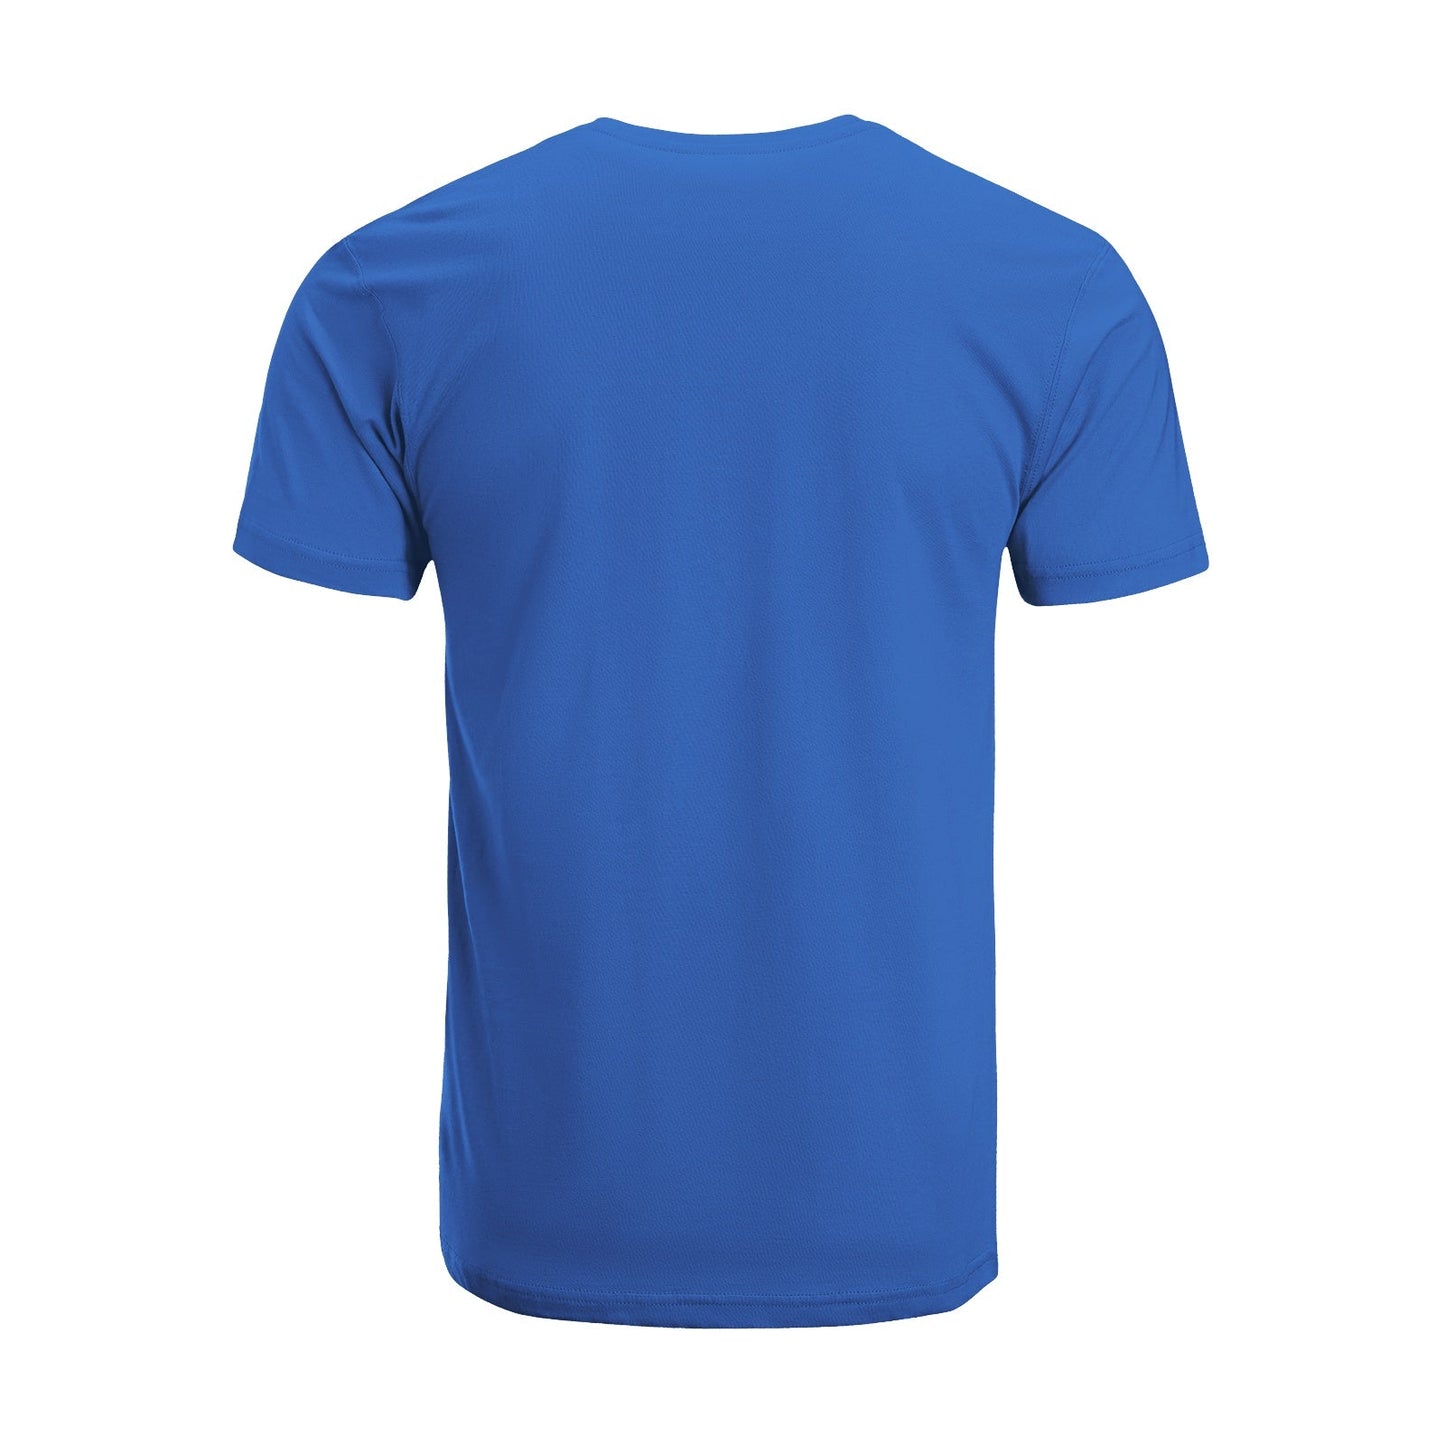 Unisex Short Sleeve Crew Neck Cotton Jersey T-Shirt MOM 46